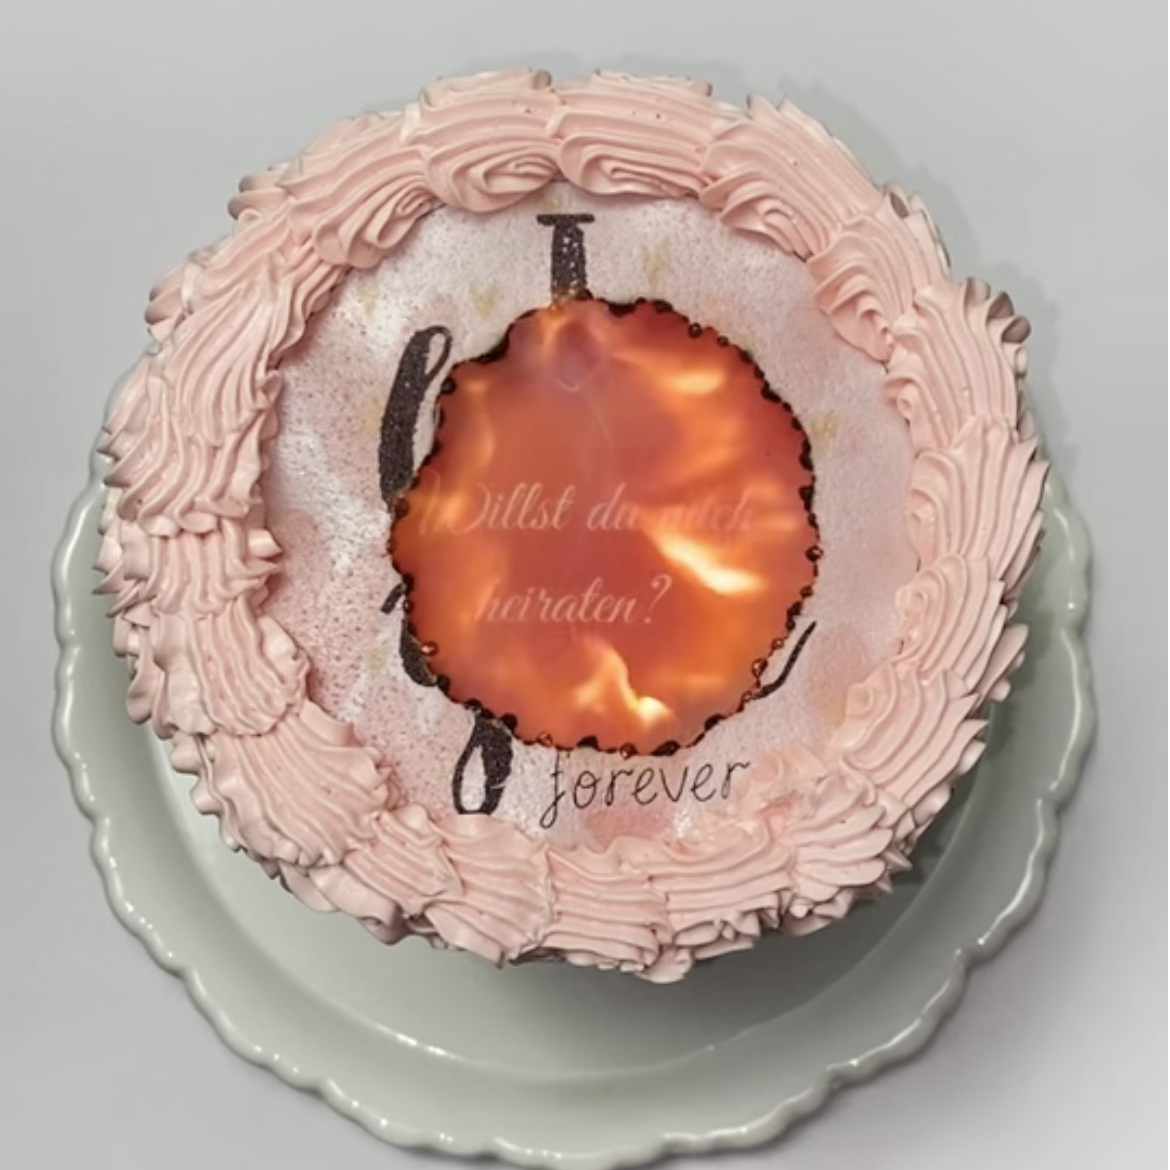 Burn Away Cake: Love you/Willst du mich heiraten?